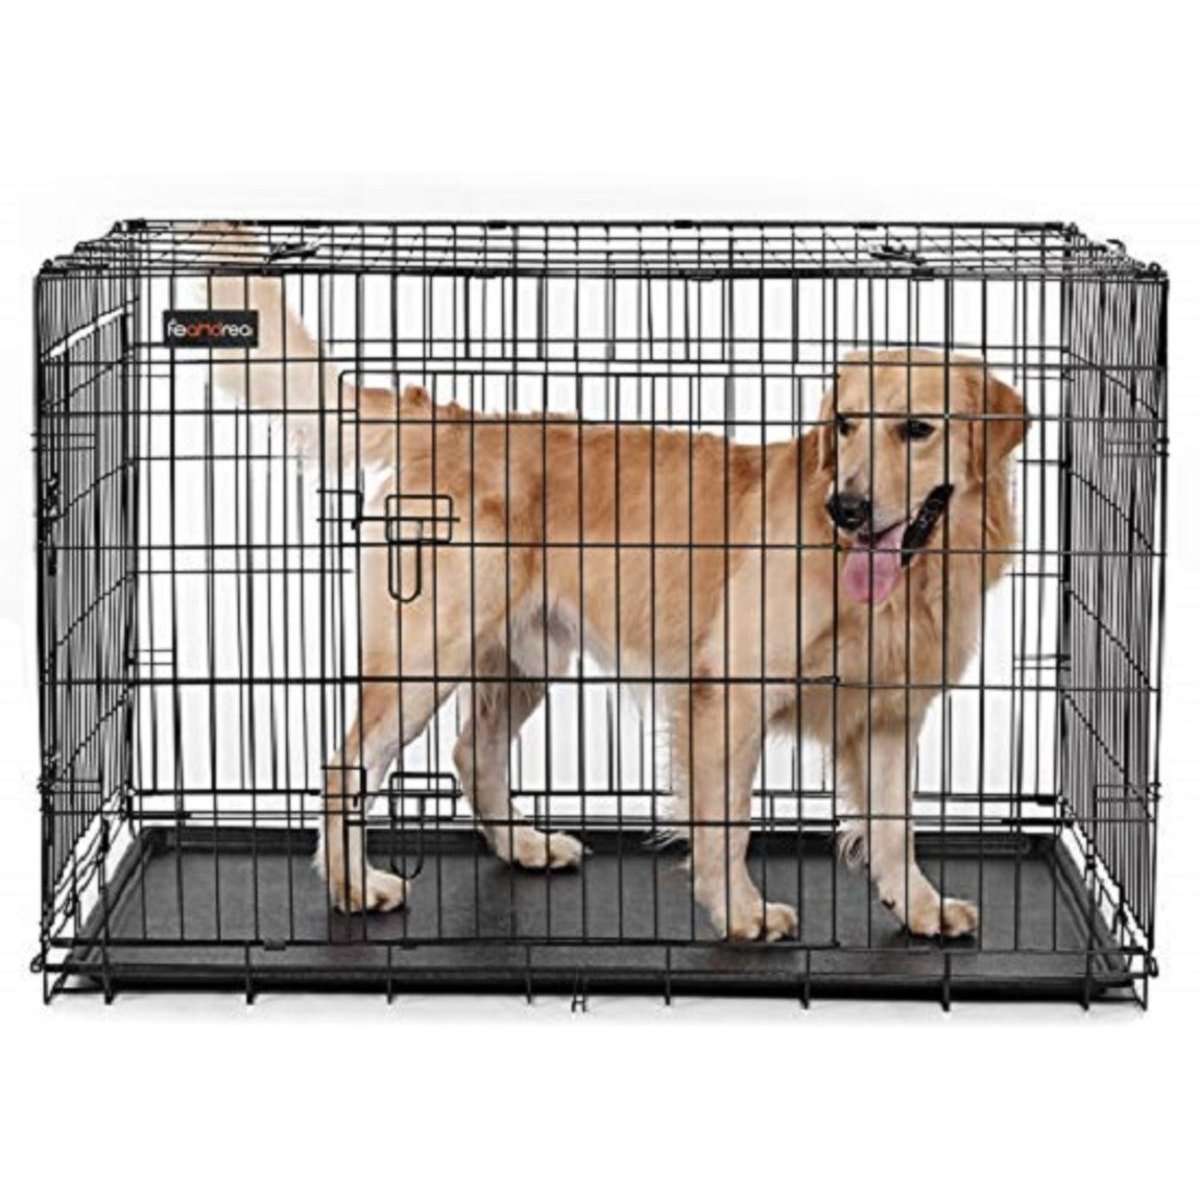 Nancy's Hondenbench - Bench Voor Hond - 2 Deurs Kennel - Autobench